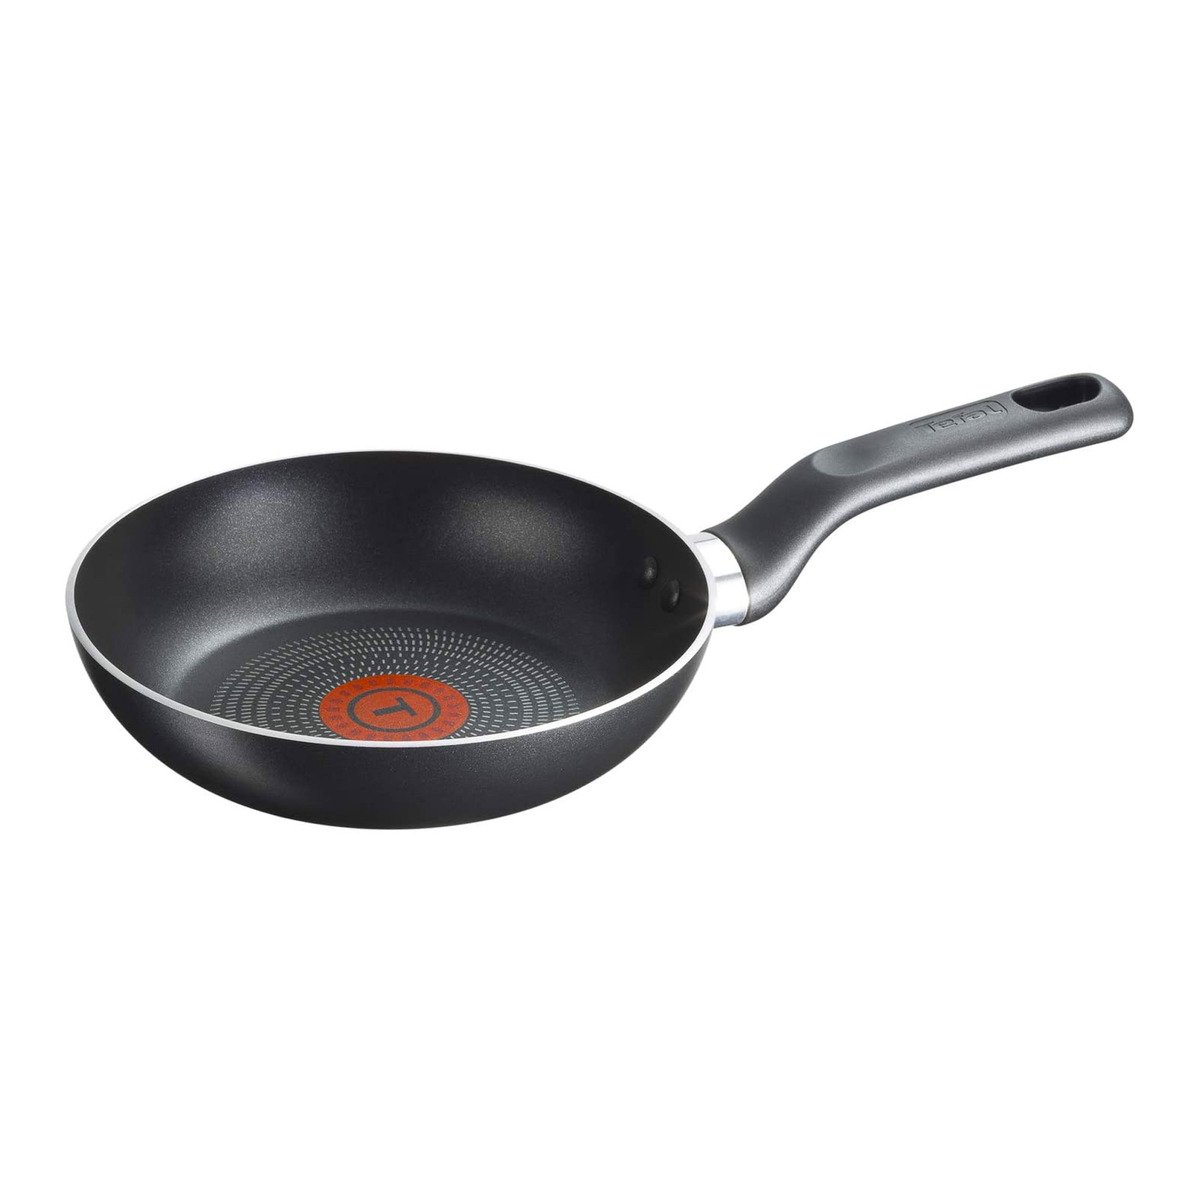 Tefal Super Cook Non-Stick Fry Pan, 24 cm, B1430484